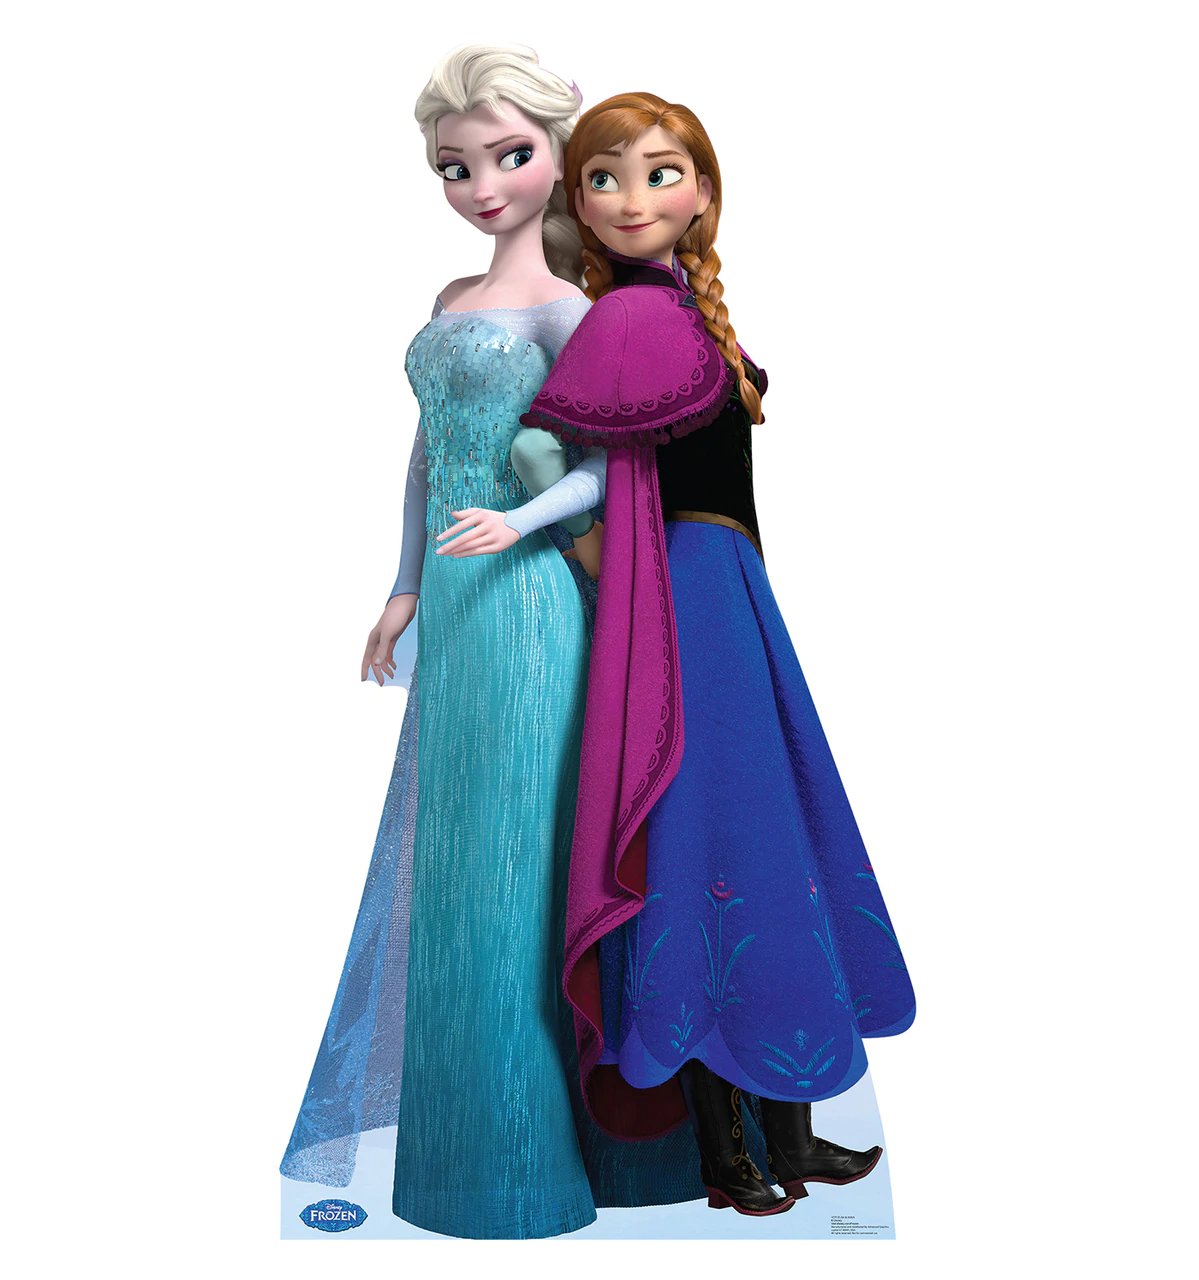 Cardboard Cutout - Elsa and Anna